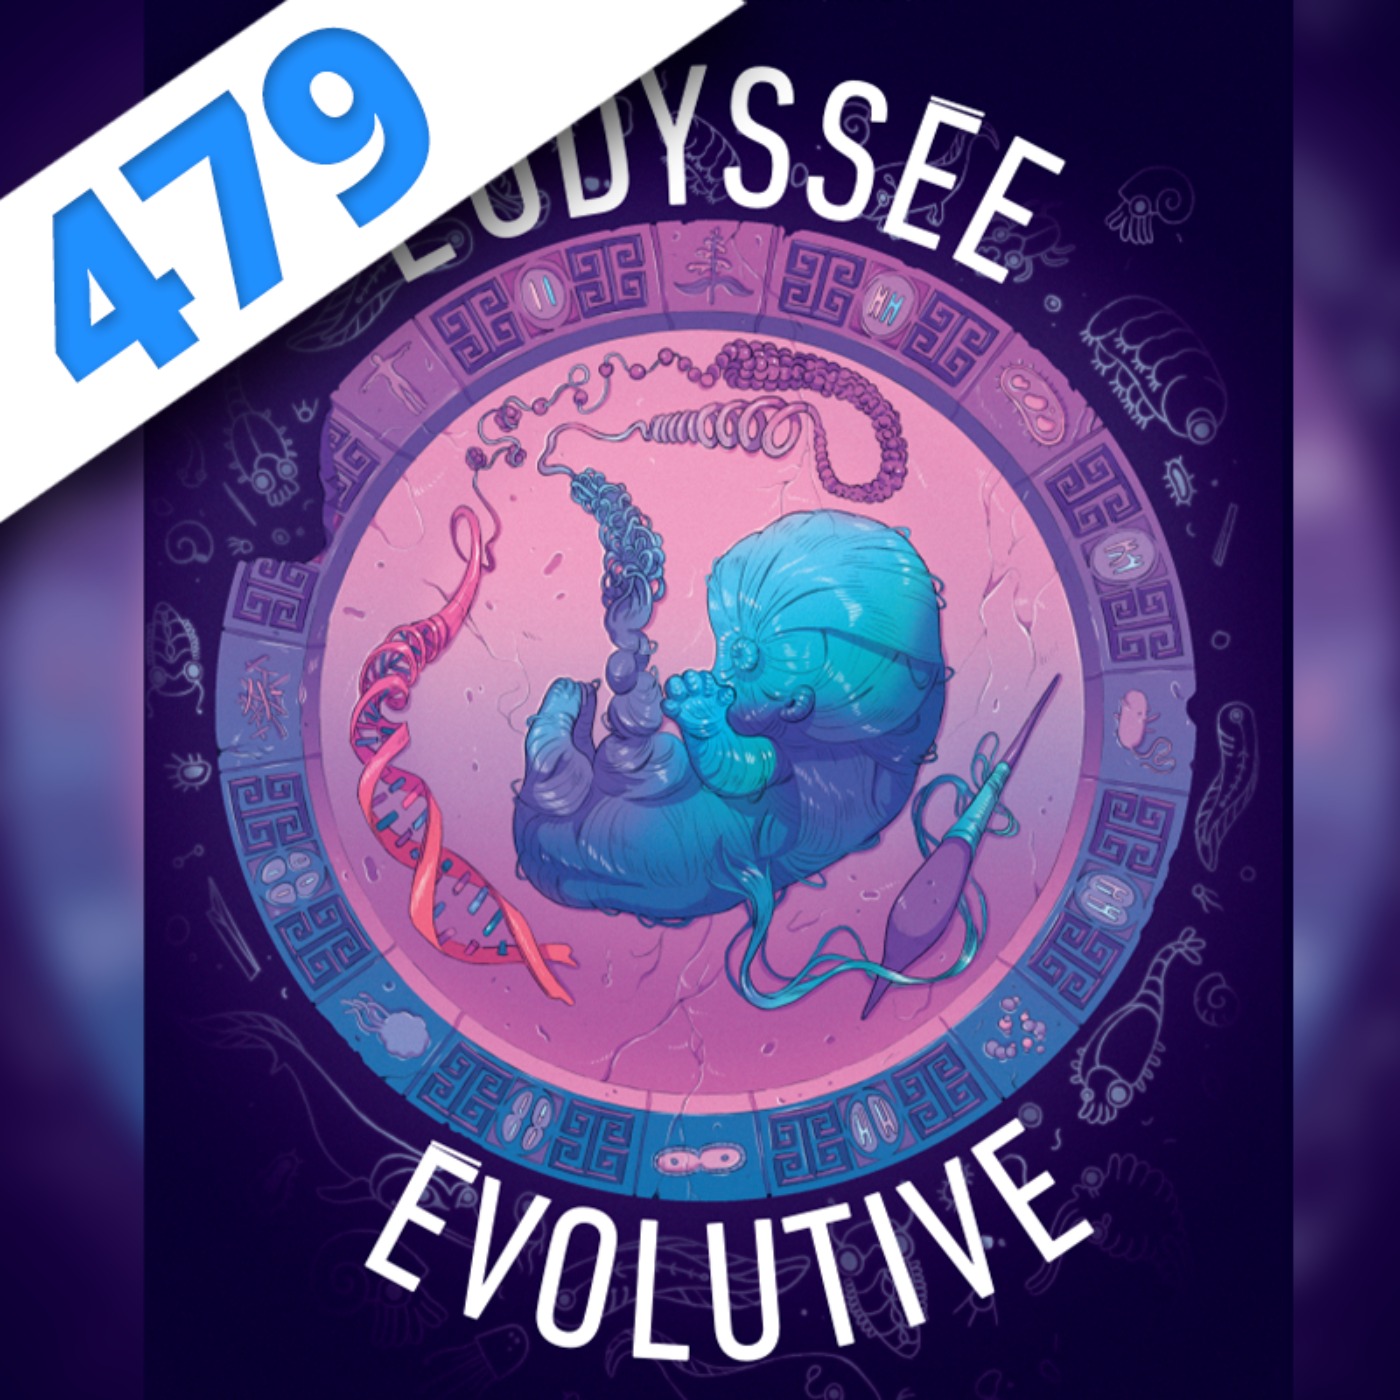 479 - L'Odyssée évolutive